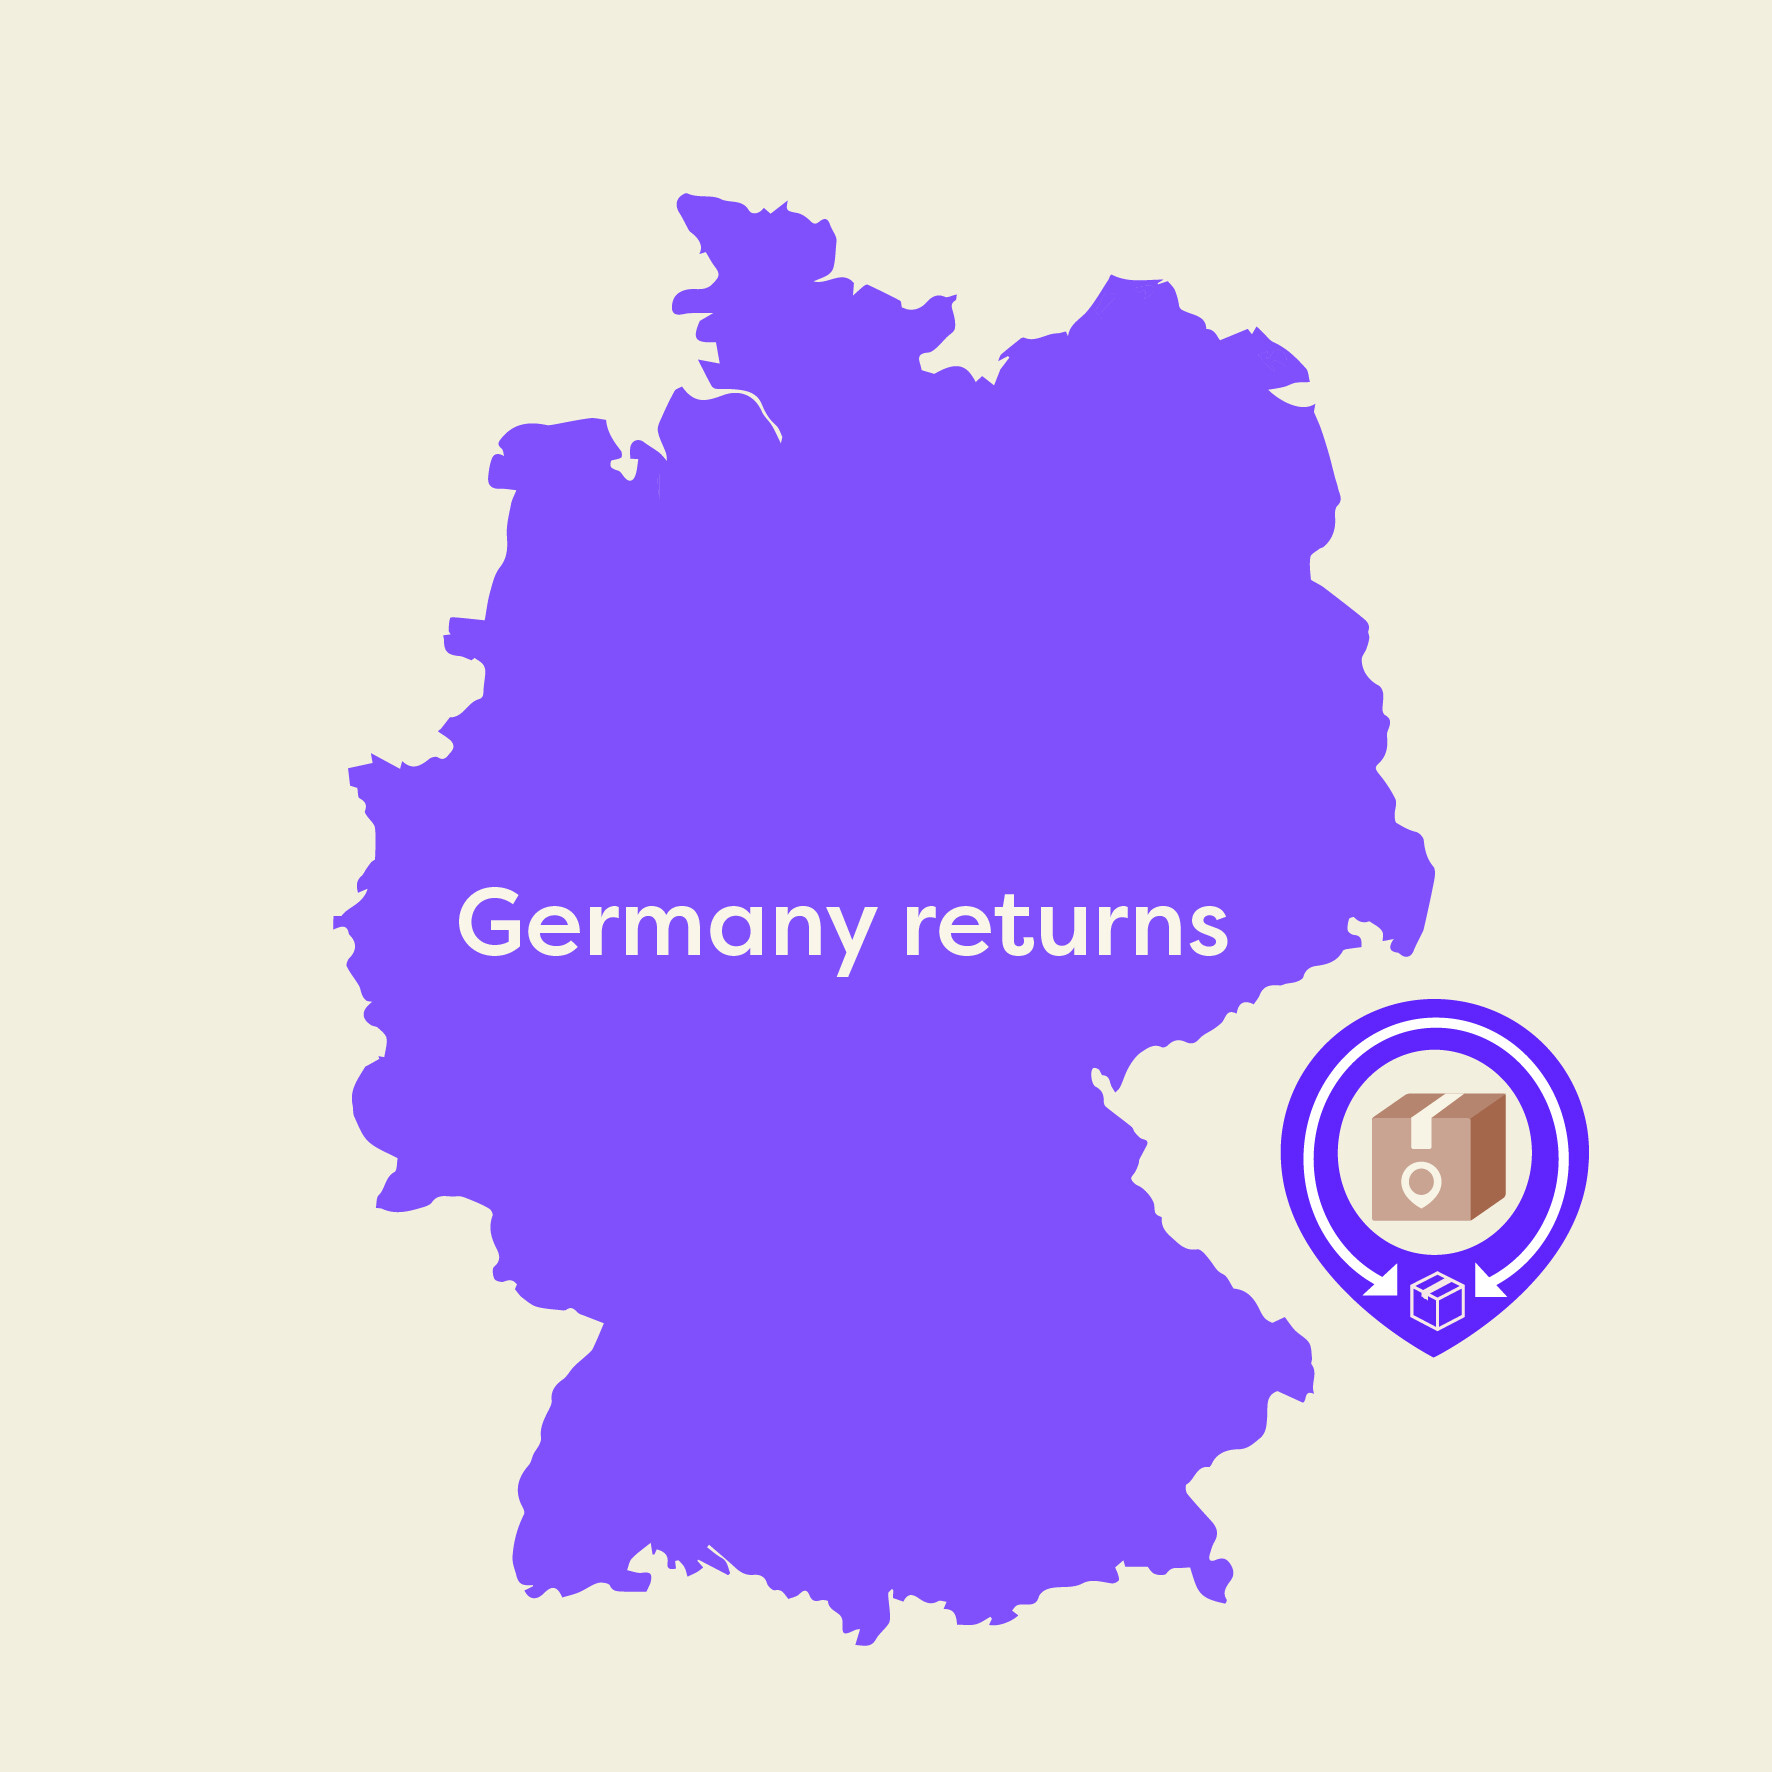 Germany returns